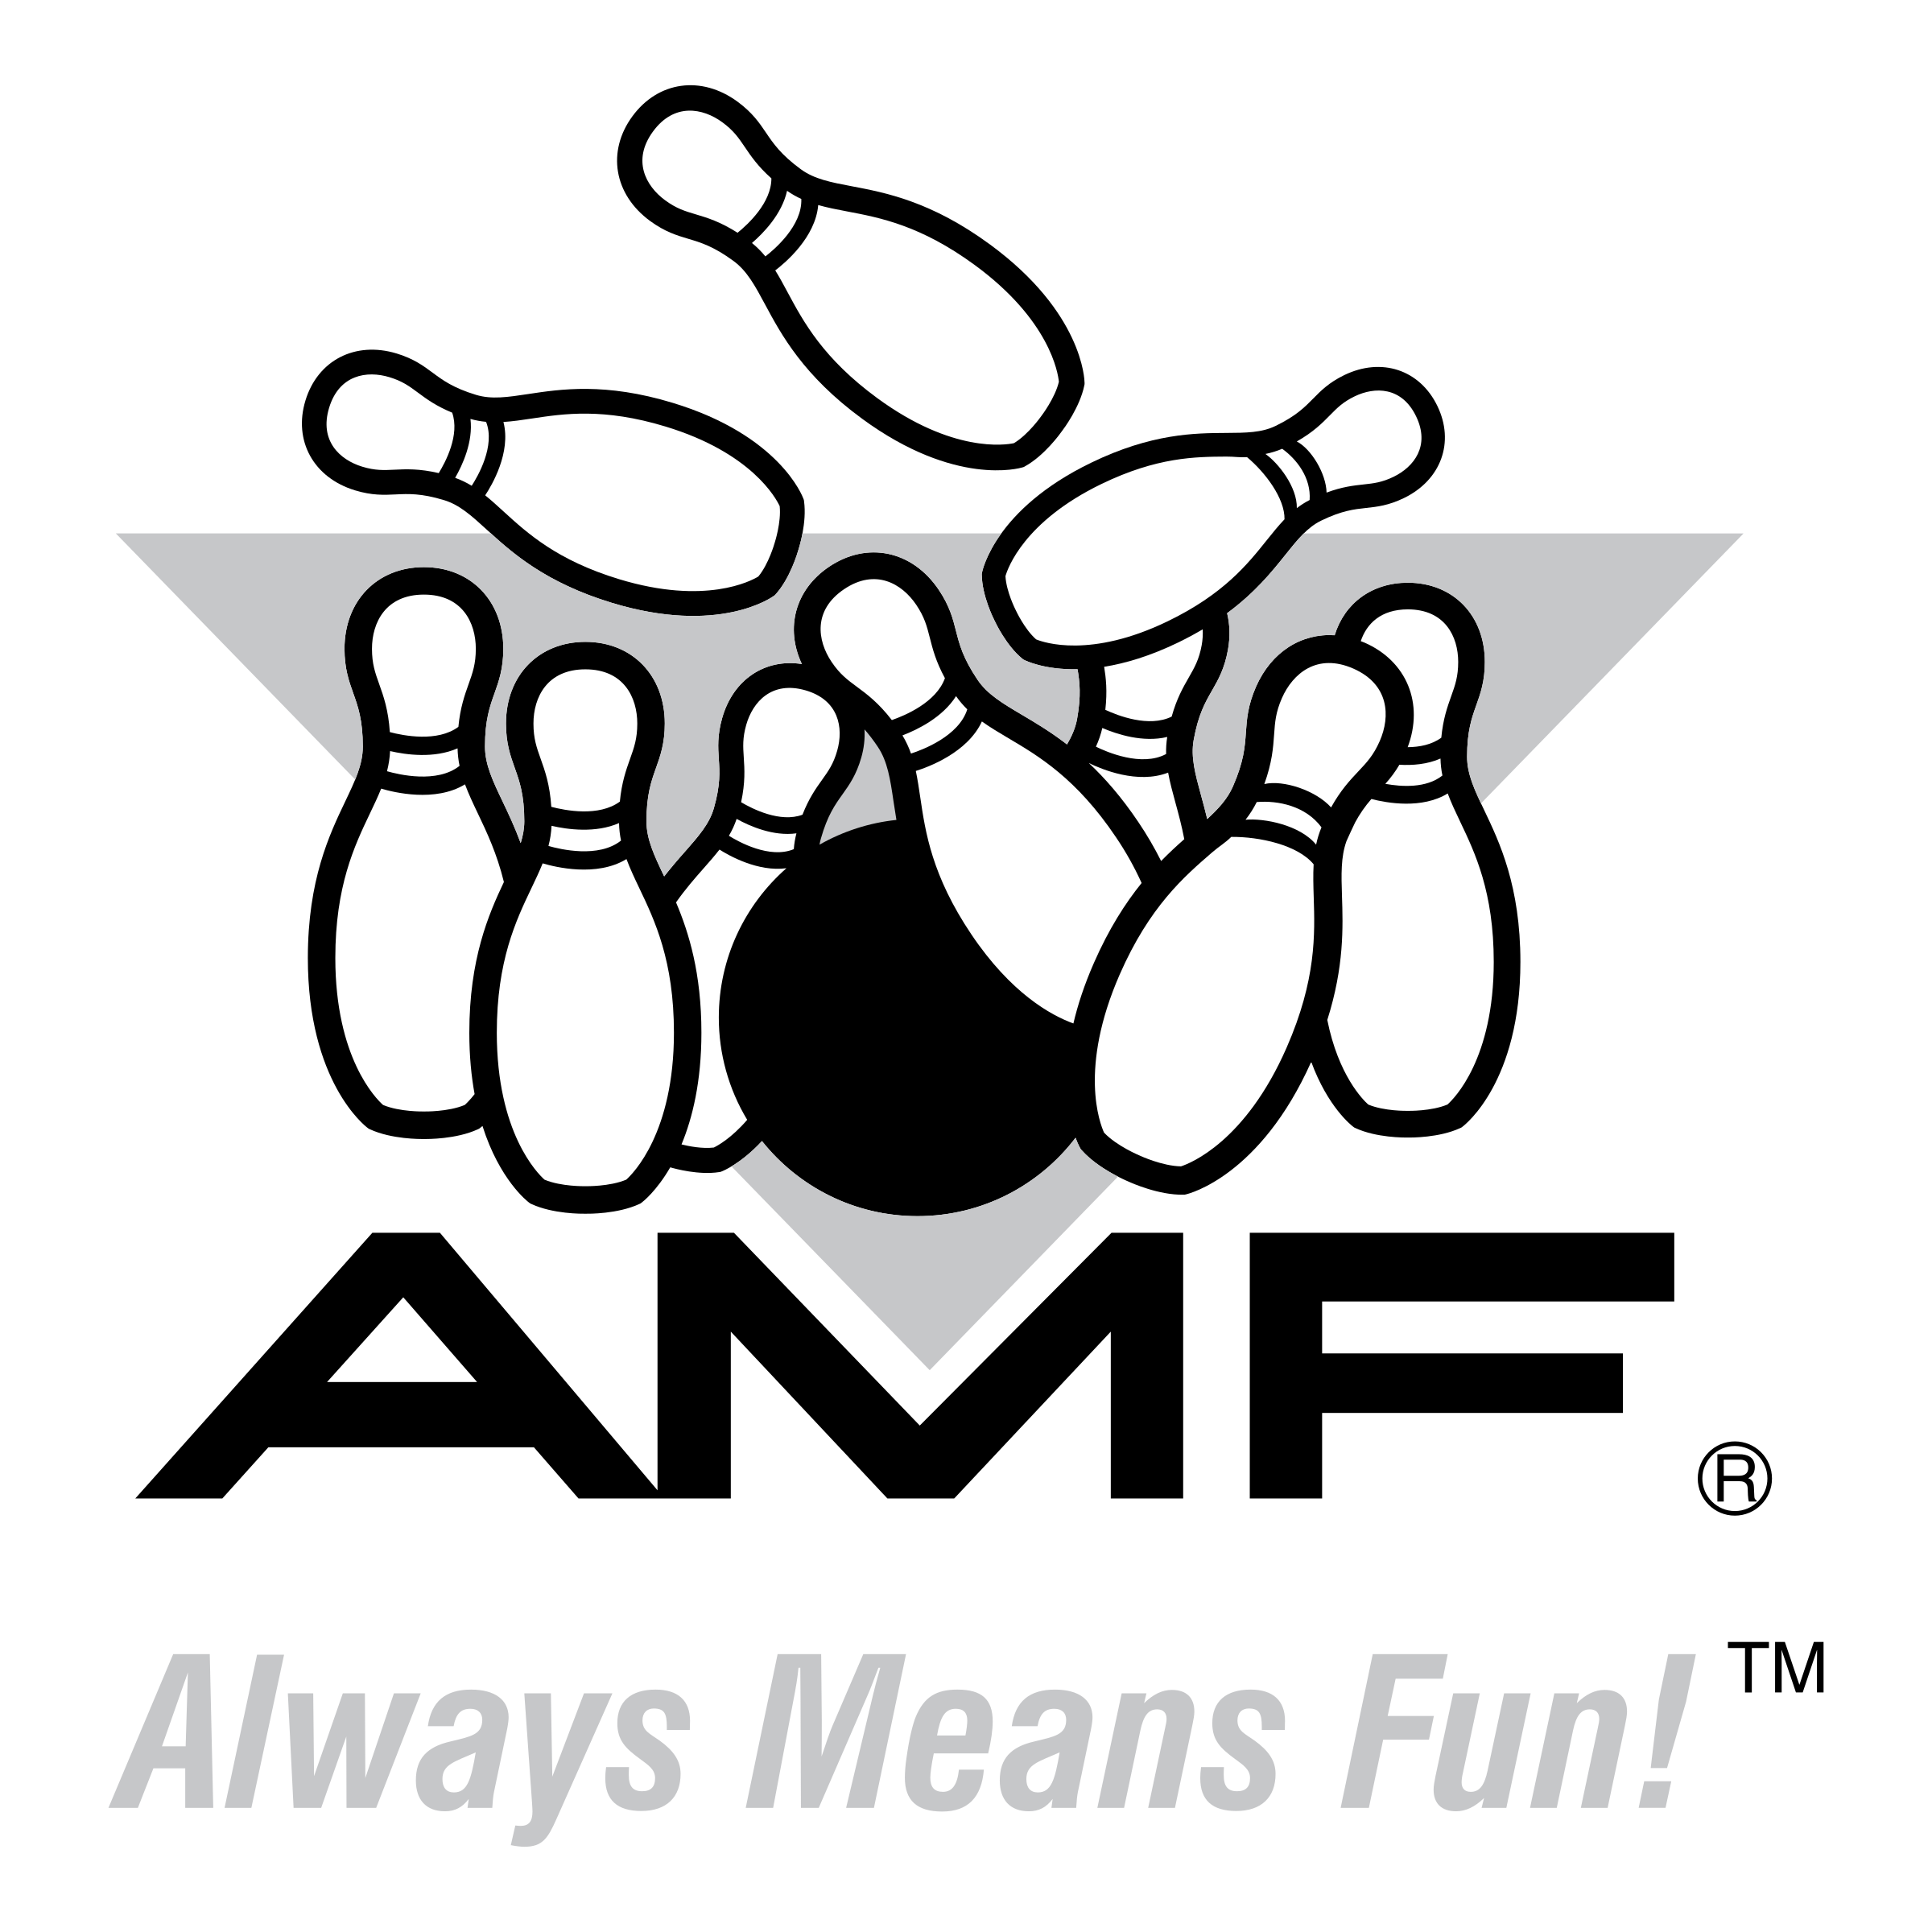 AMF Bowling Logo PNG Transparent & SVG Vector.